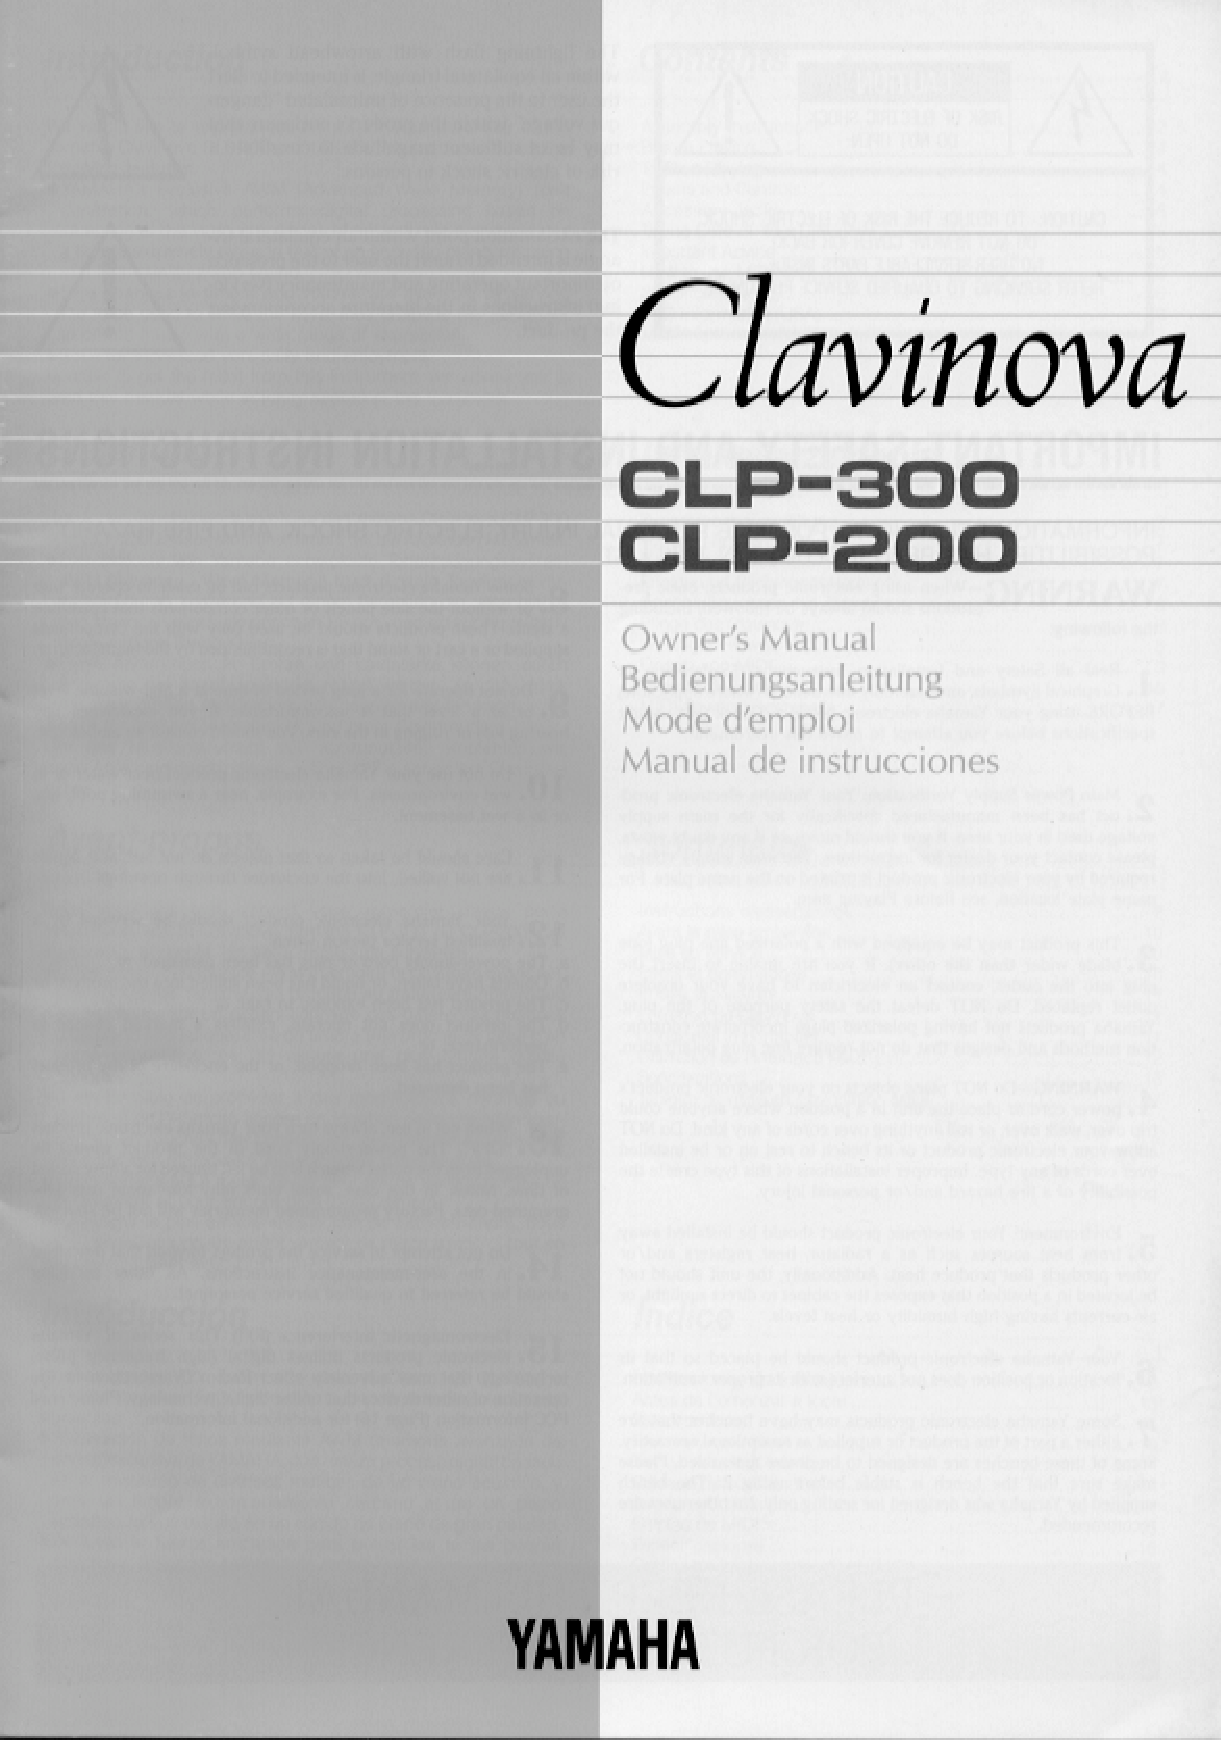 Yamaha CLP-300E, CLP-300 User Manual